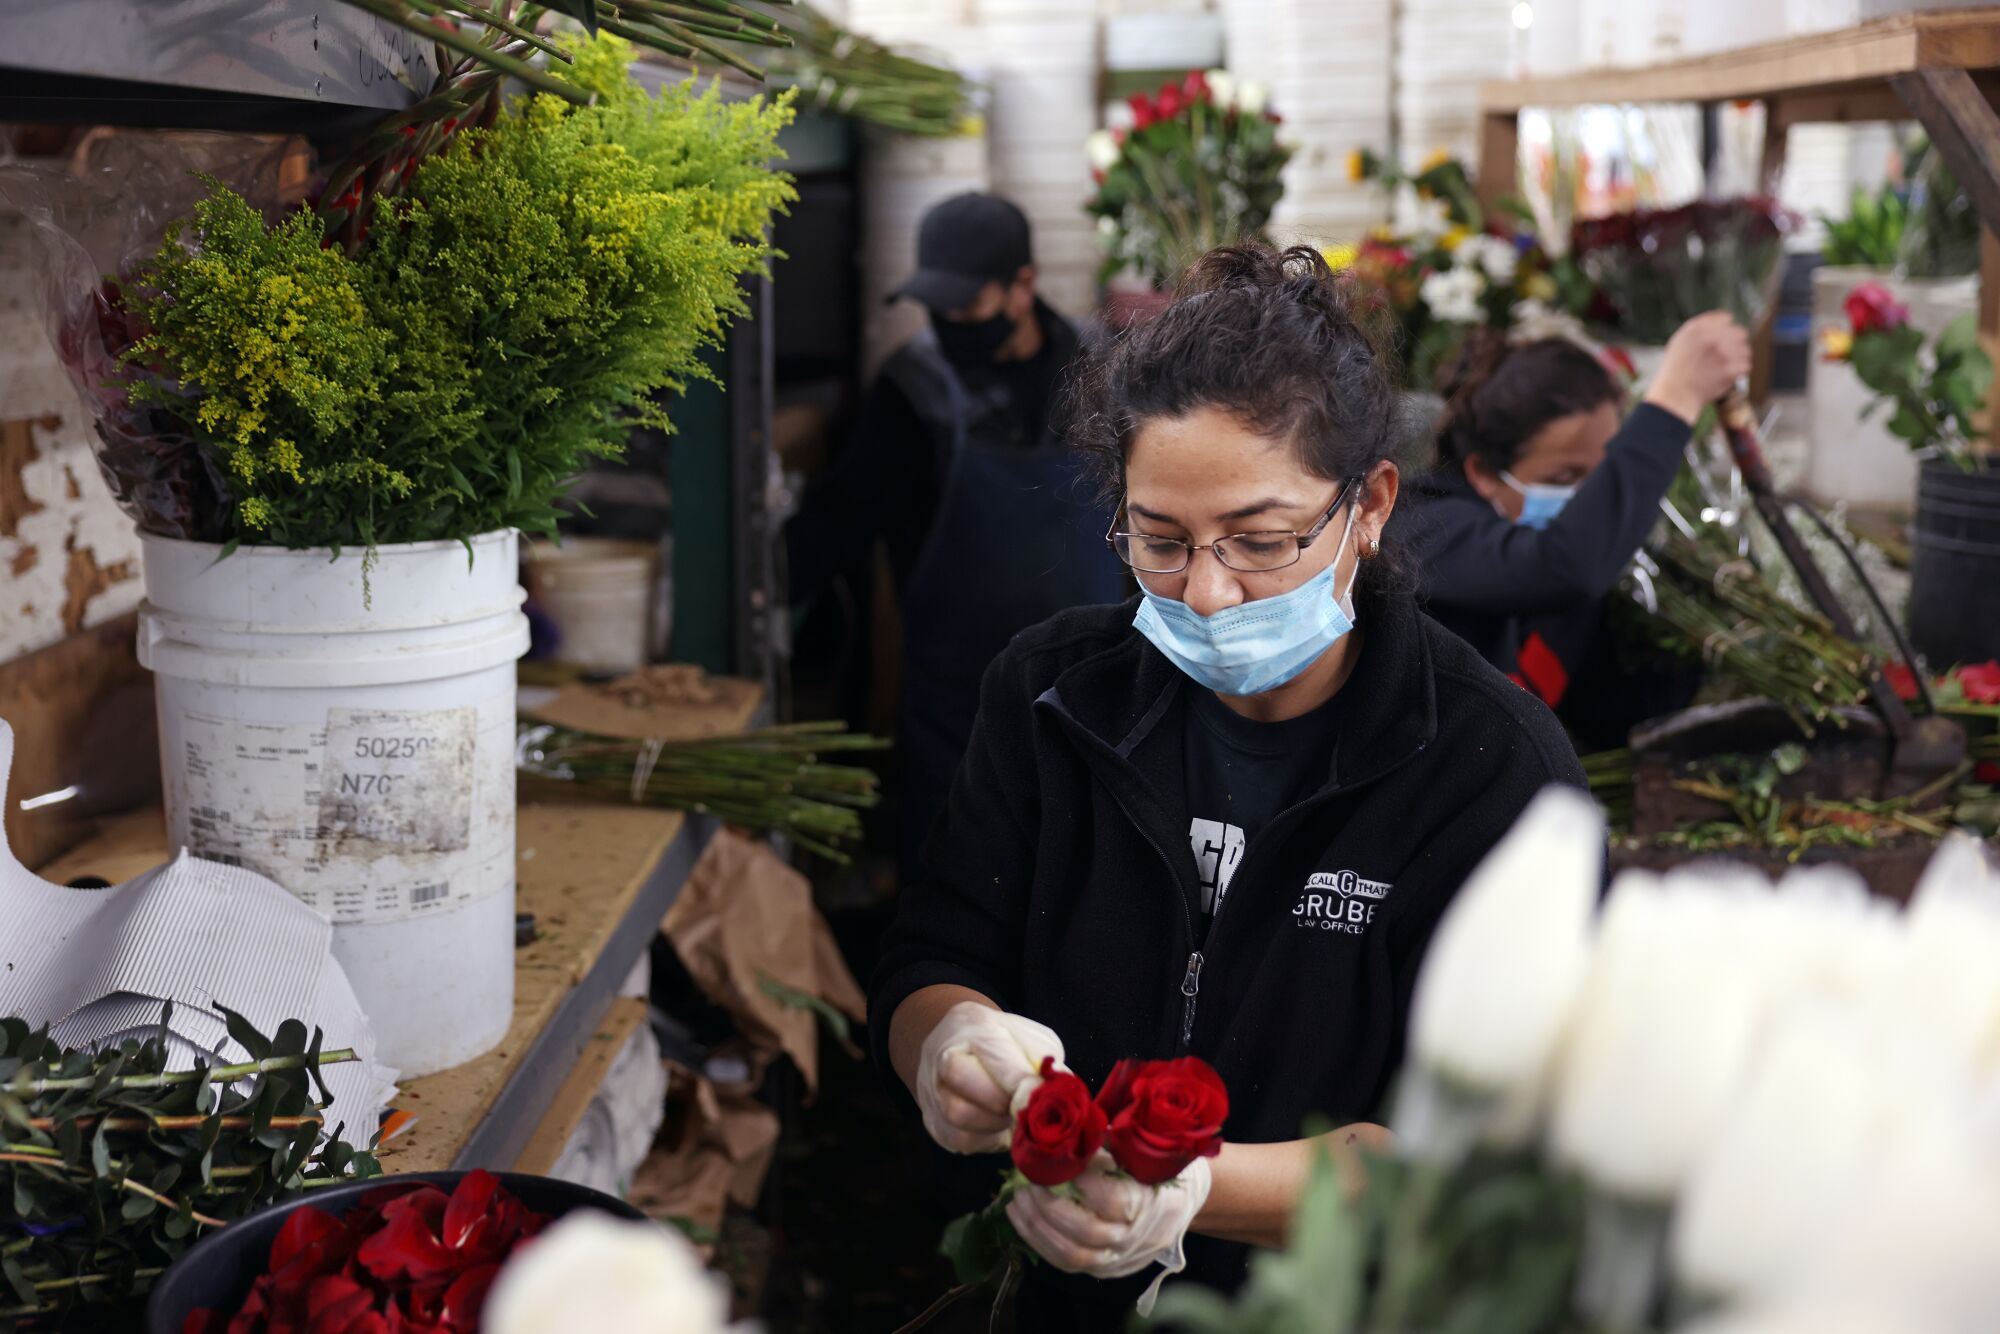 Esmeralda Sanchez prepares roses at Julia's Wholesale Flowers.